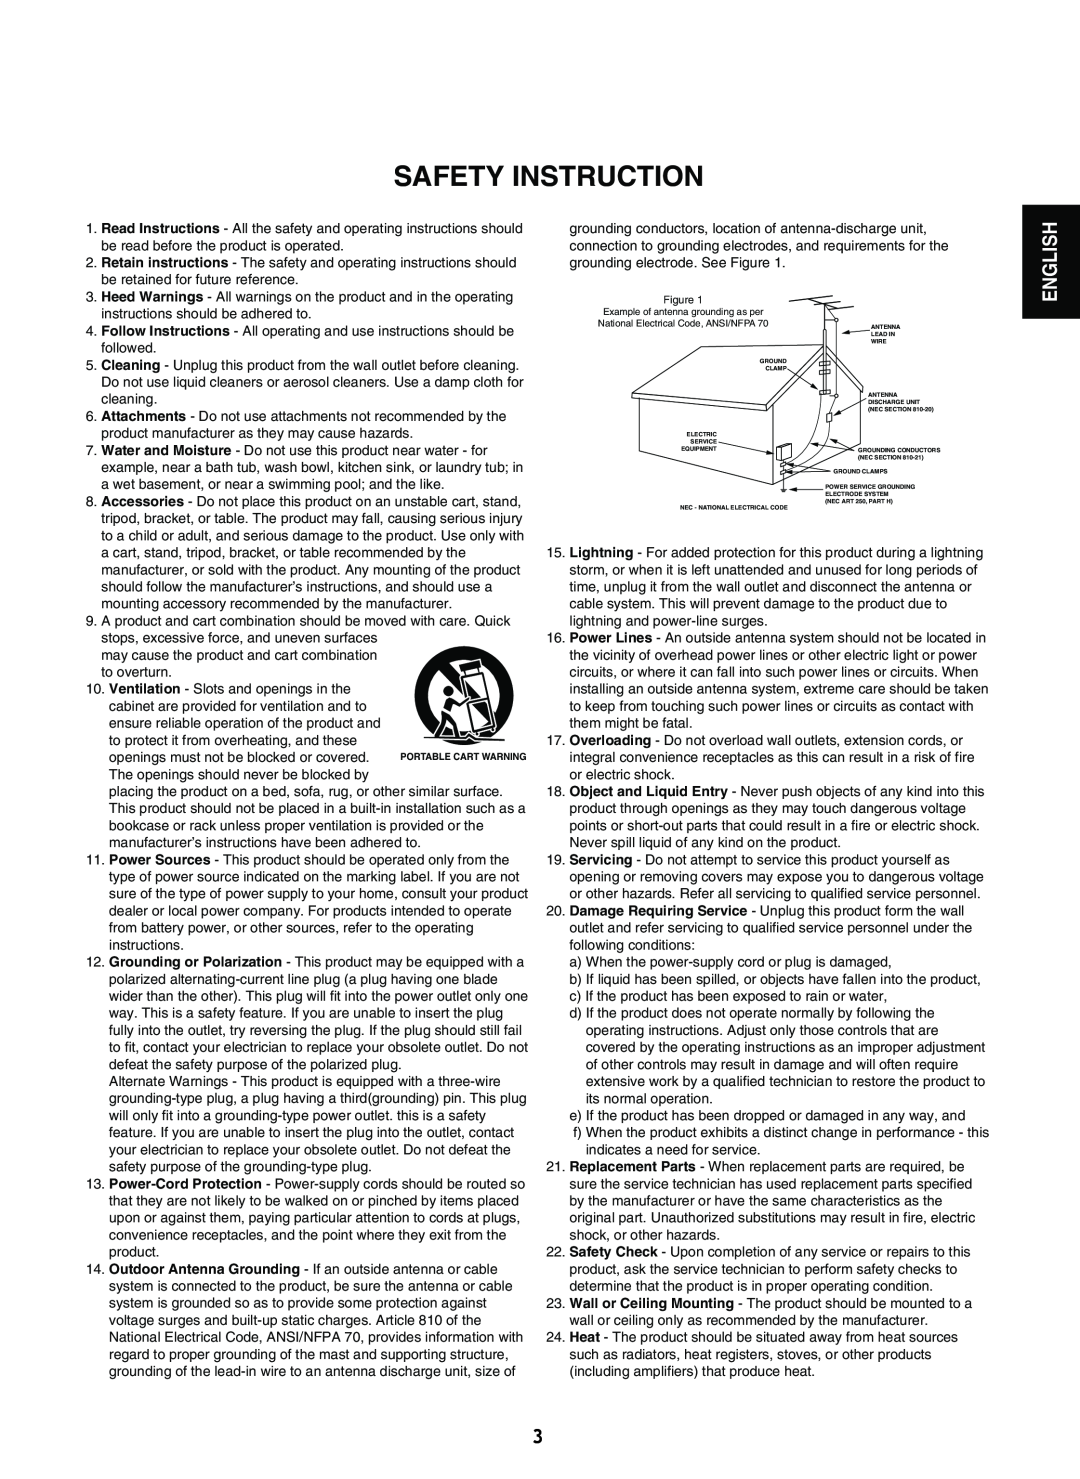 Sherwood A-965 manual Safety Instruction, English 